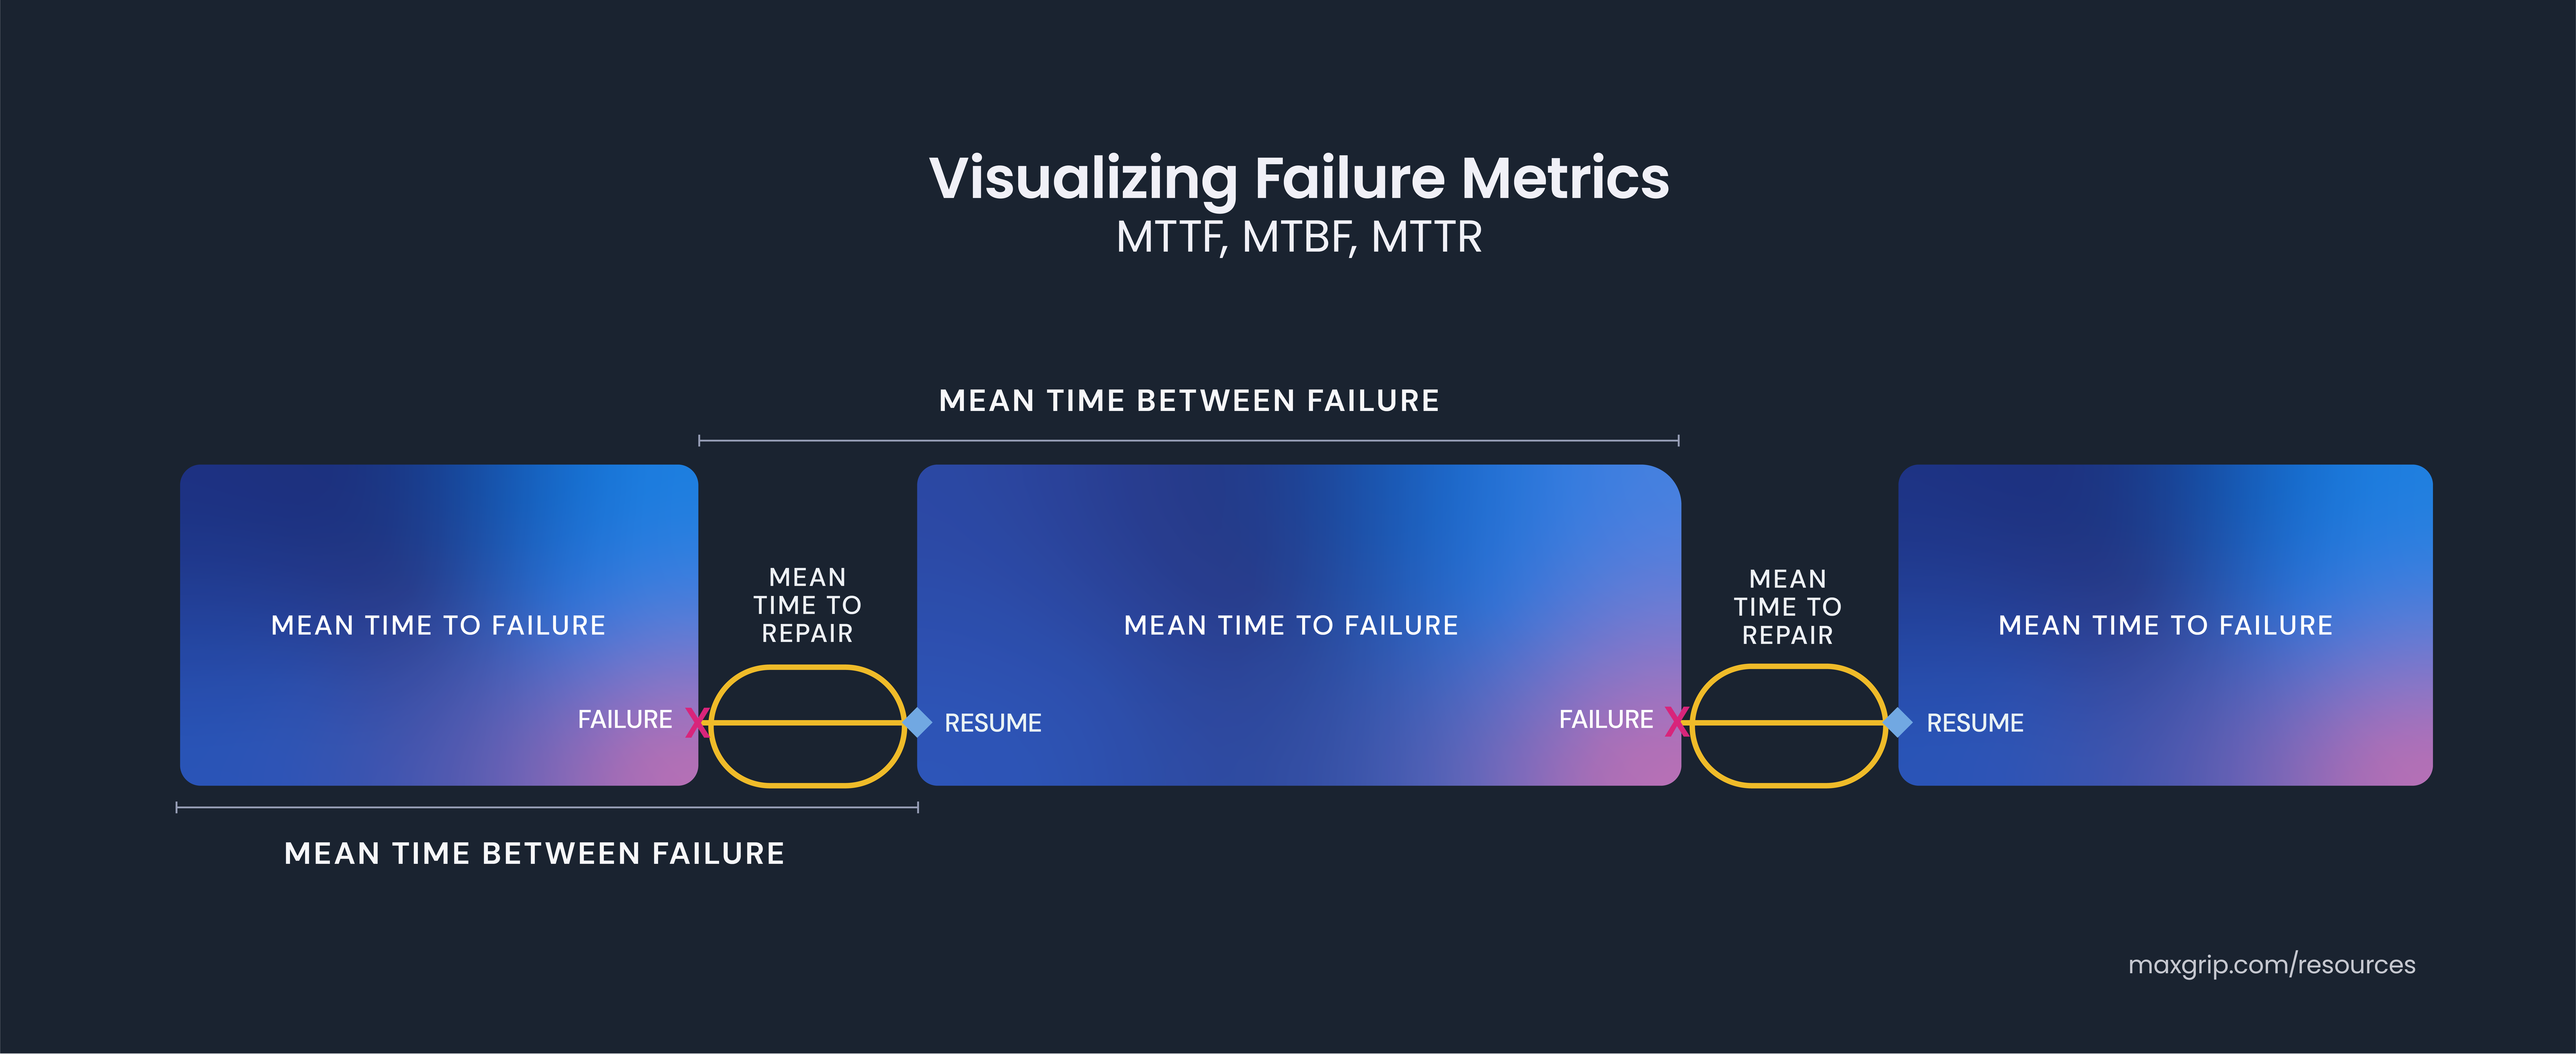 graphic illustrating reliability failure metrics, including MTTF, MTFB, MTTR